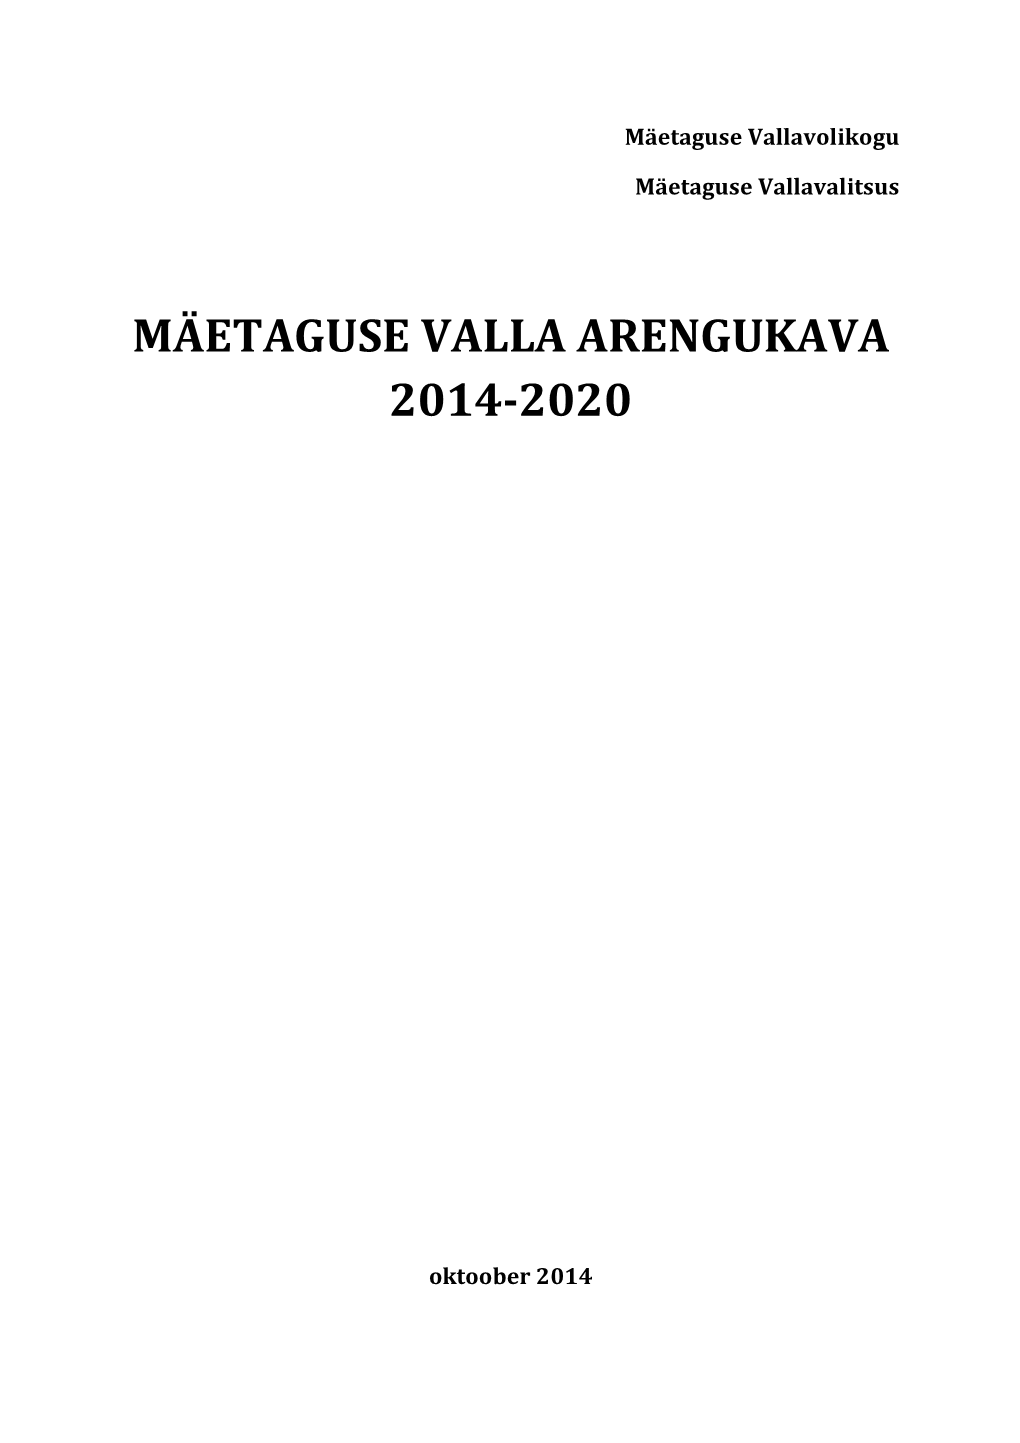 Mäetaguse Valla Arengukava 2014-2020